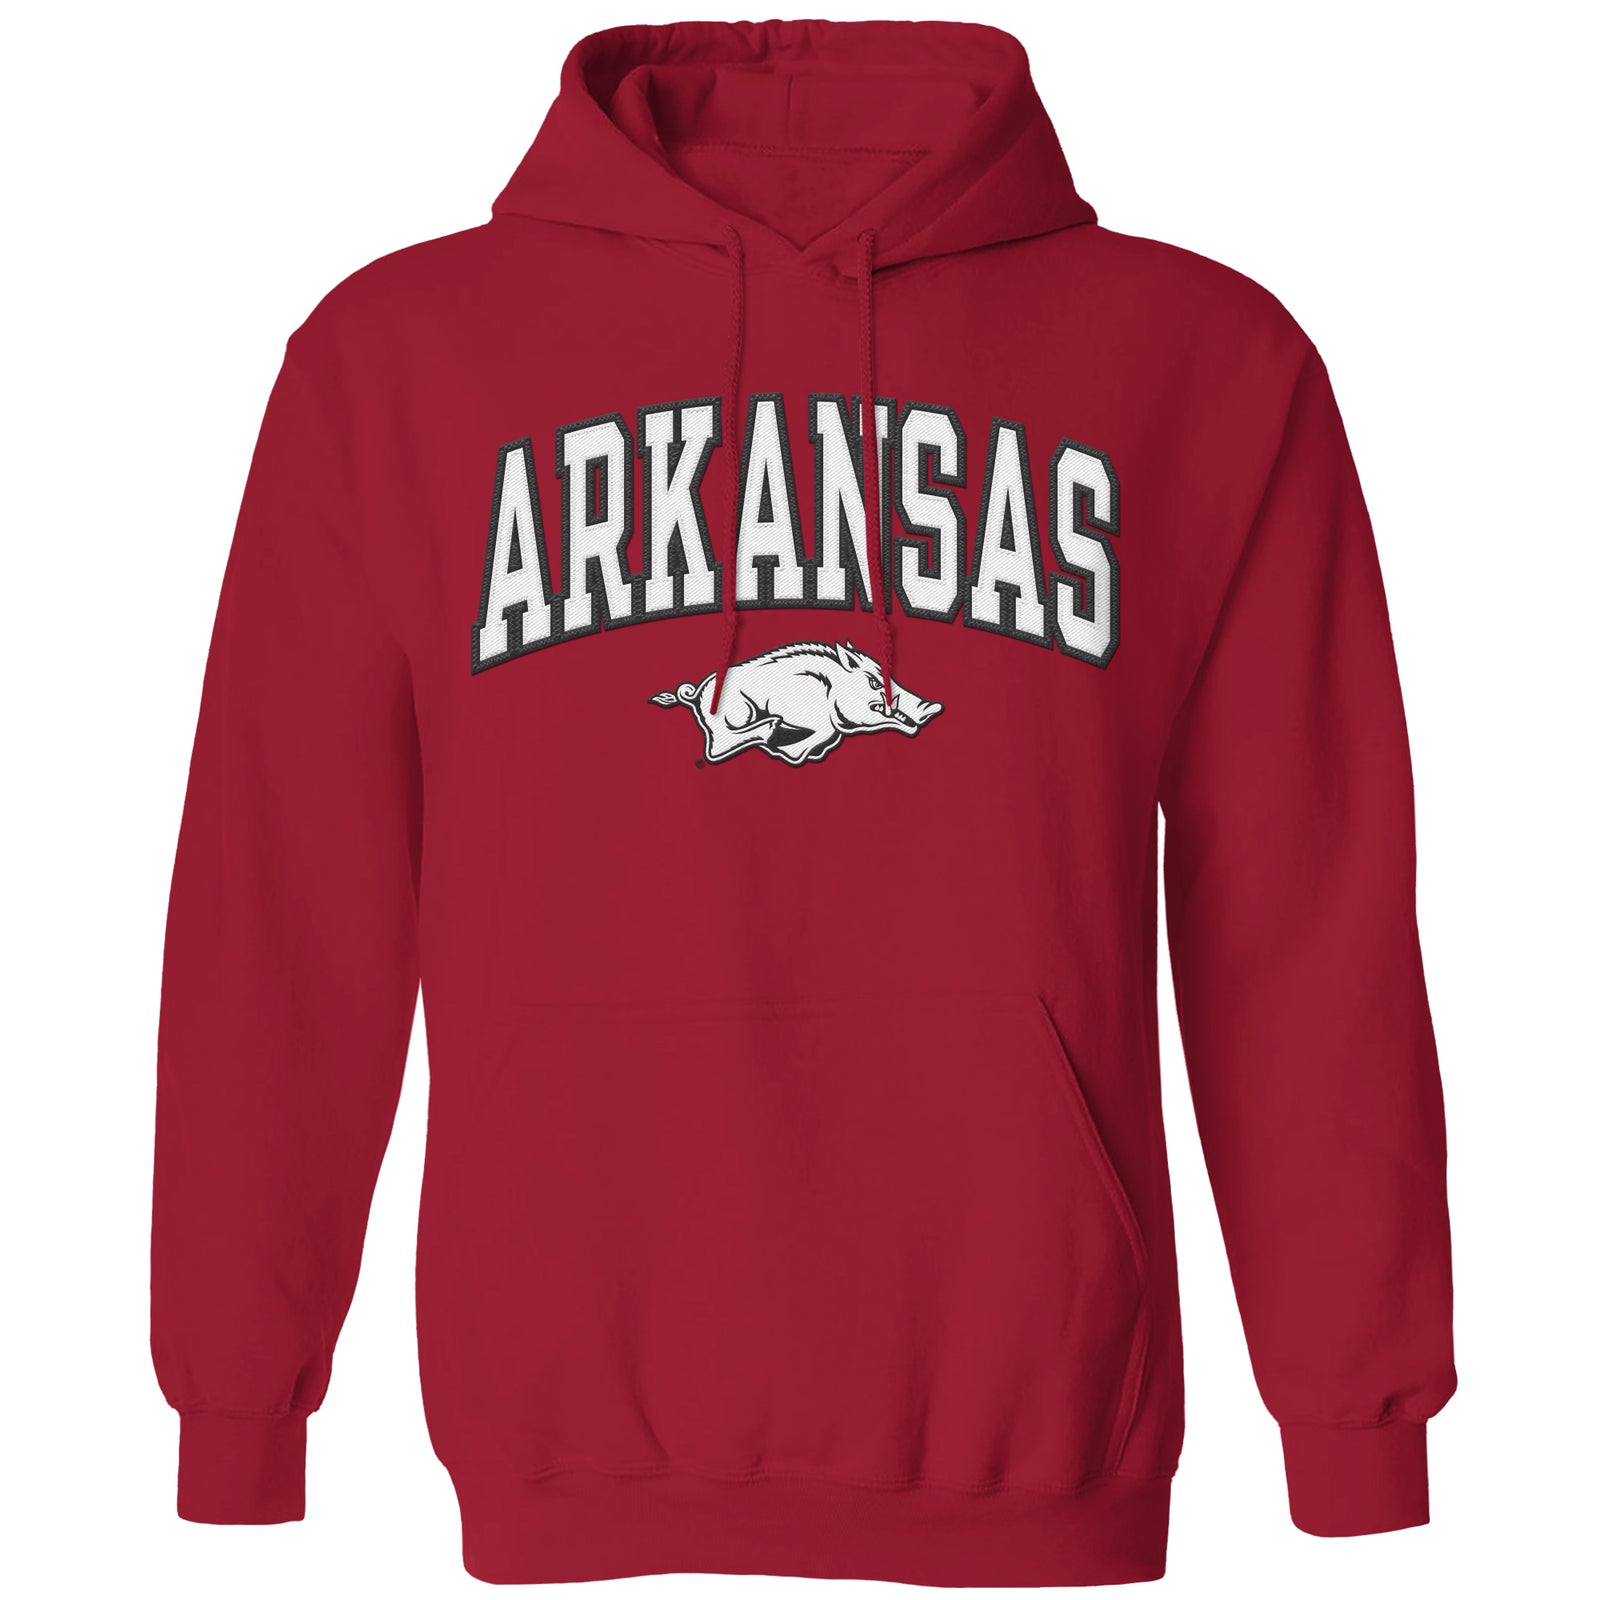 Arkansas Razorbacks Hooded Sweatshirt 50/50 Blend